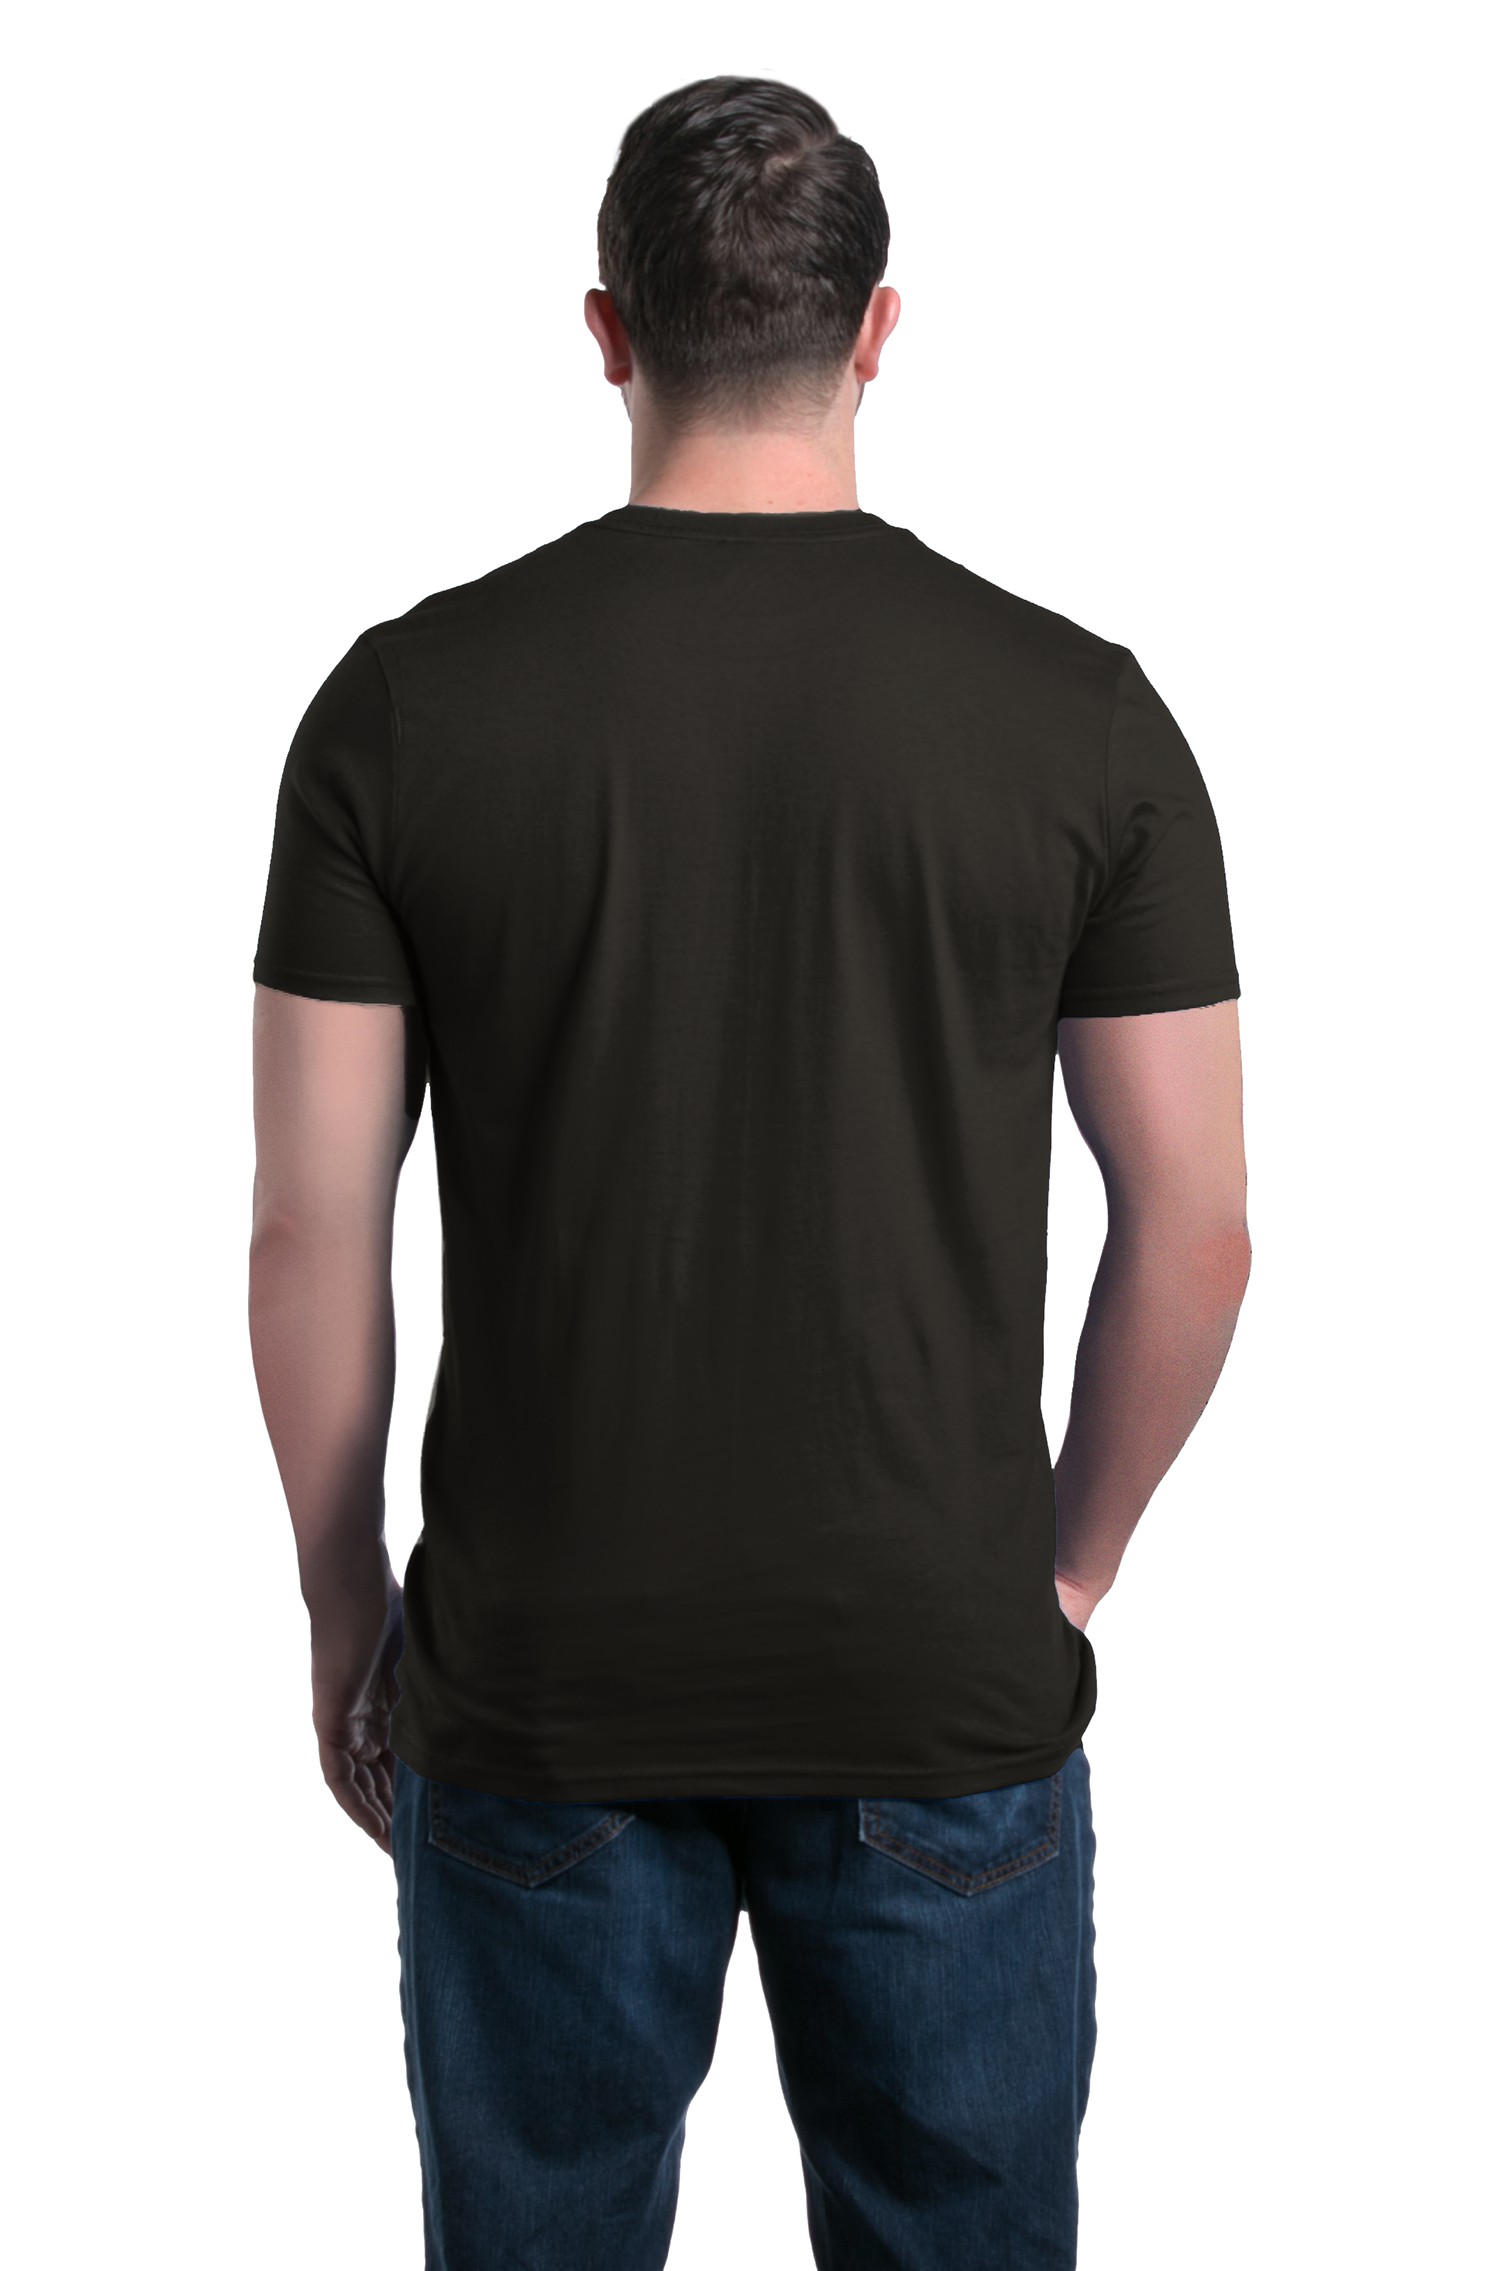 Shop4Ever Men's Jesus Cross Religious Graphic T-shirt Small Black - image 3 of 5